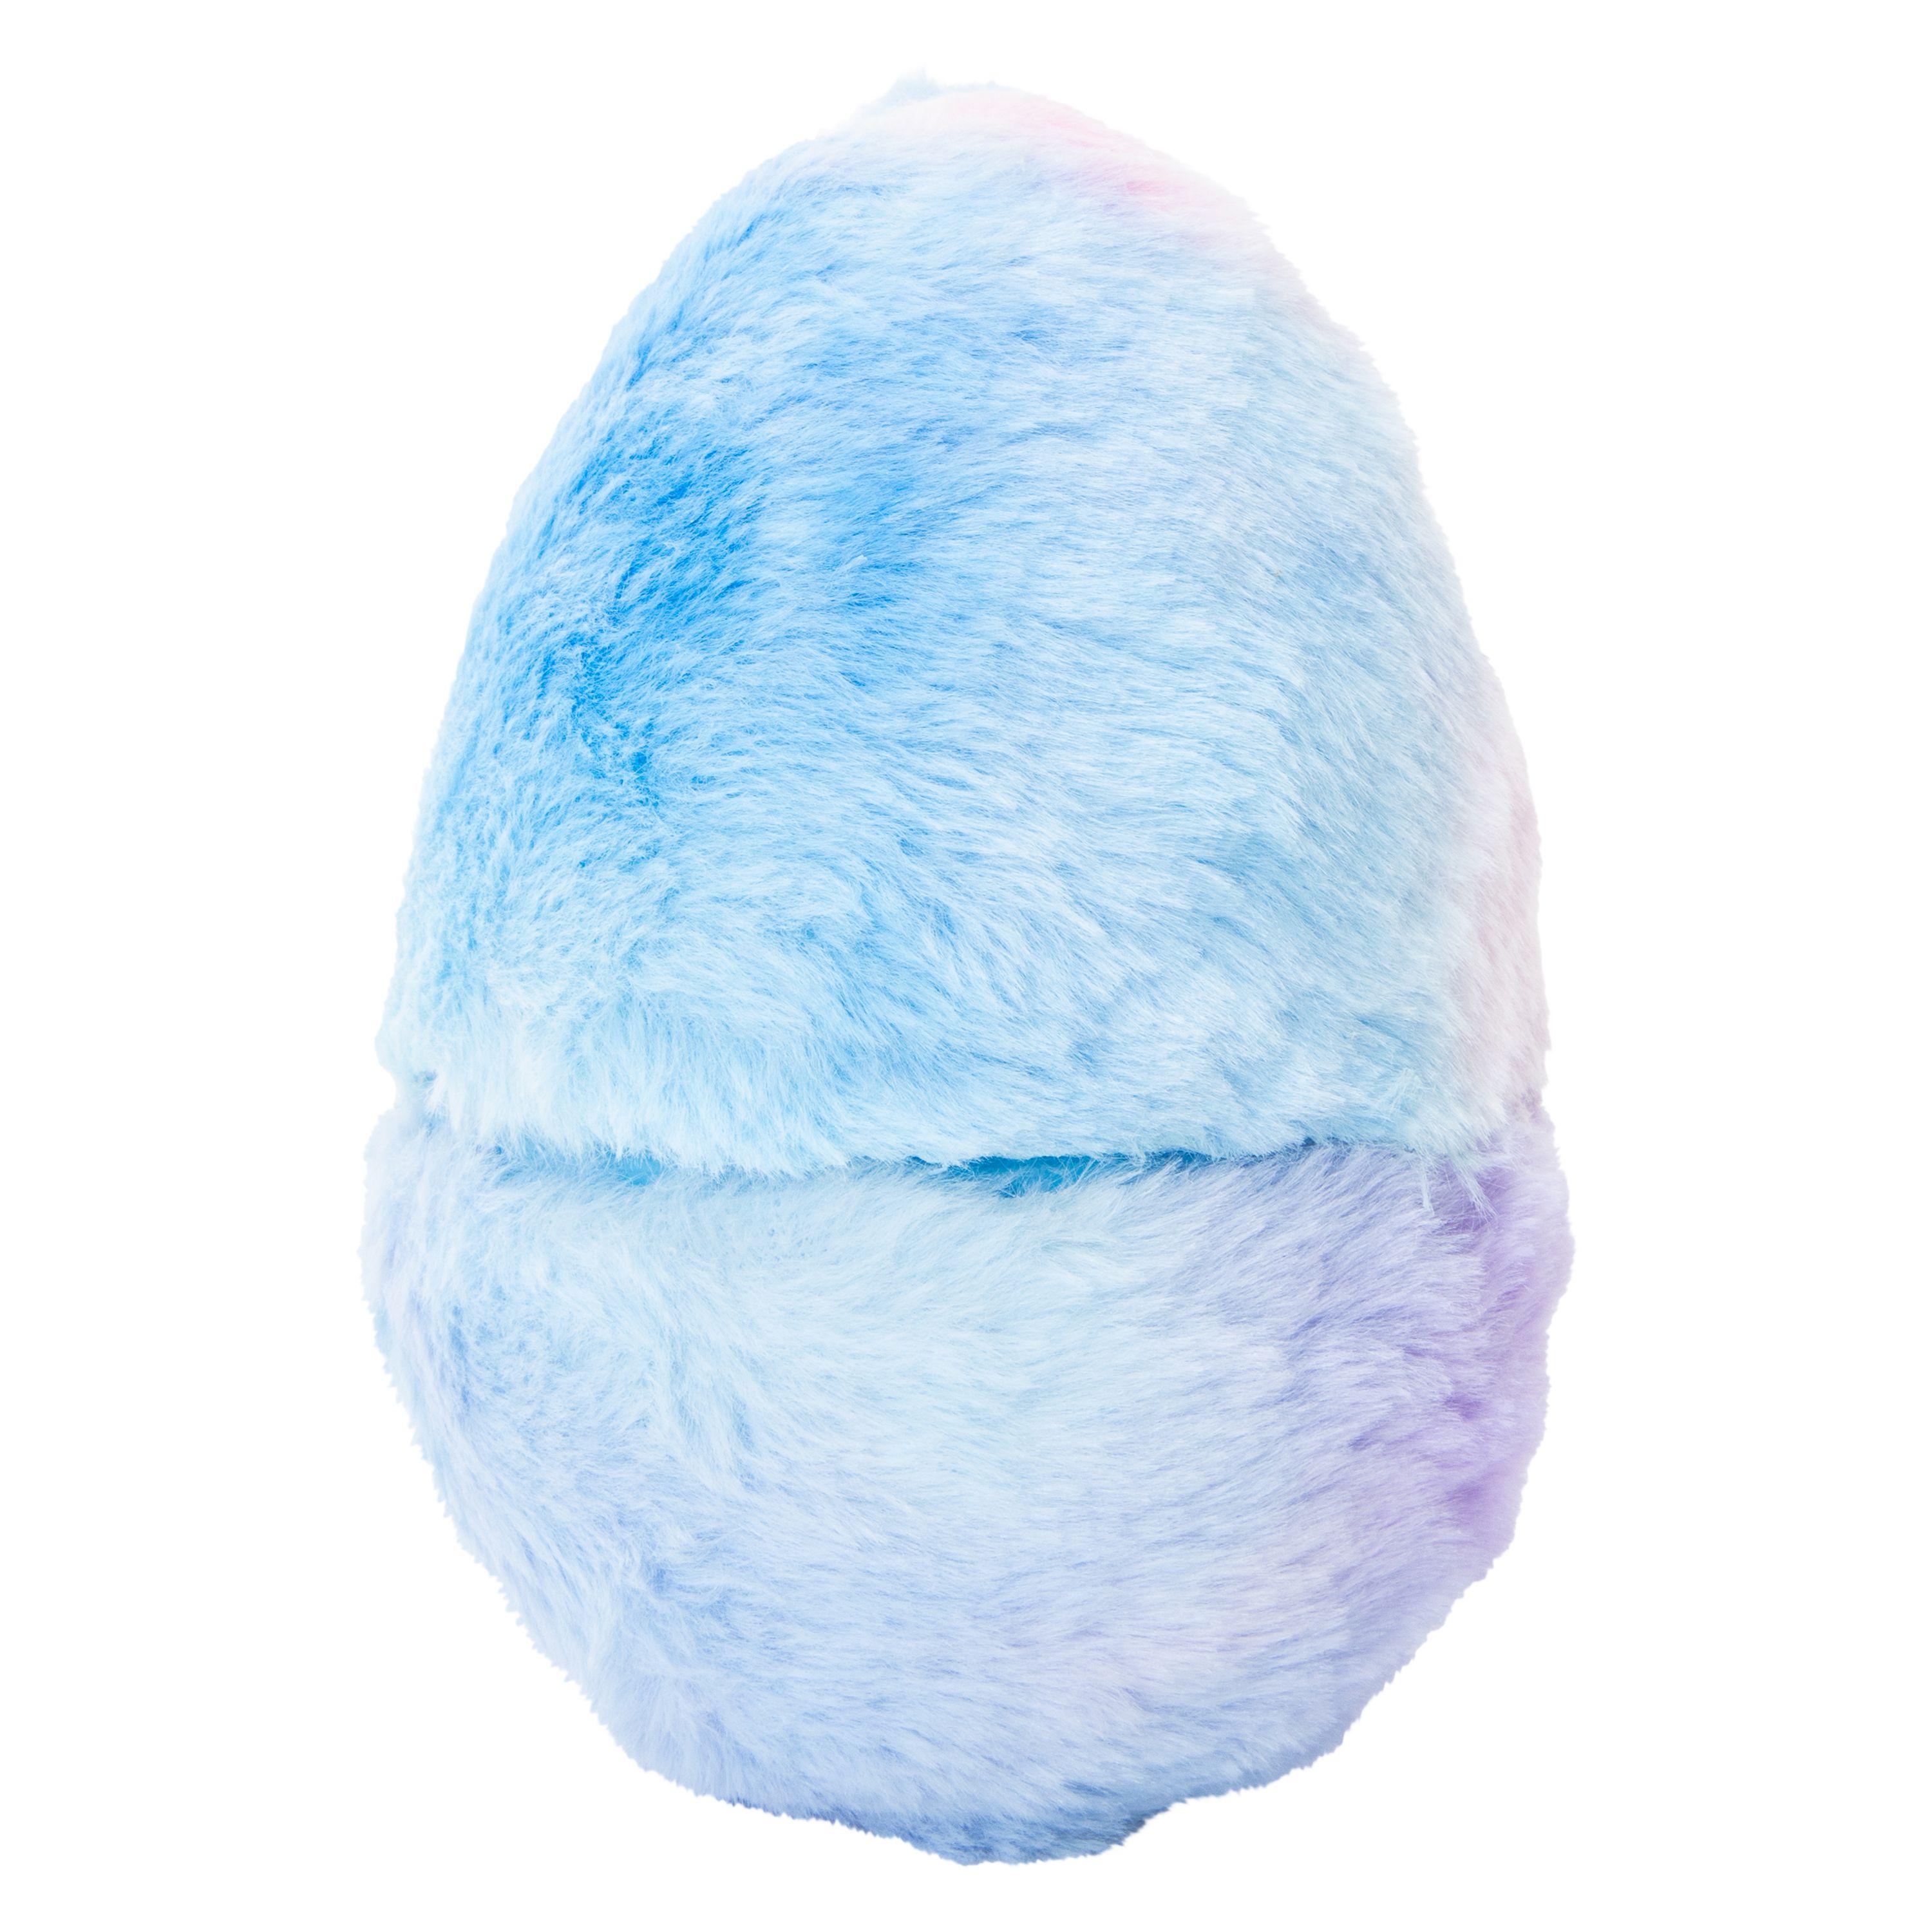 XL Fur Easter Egg 5in x 6in | Five Below